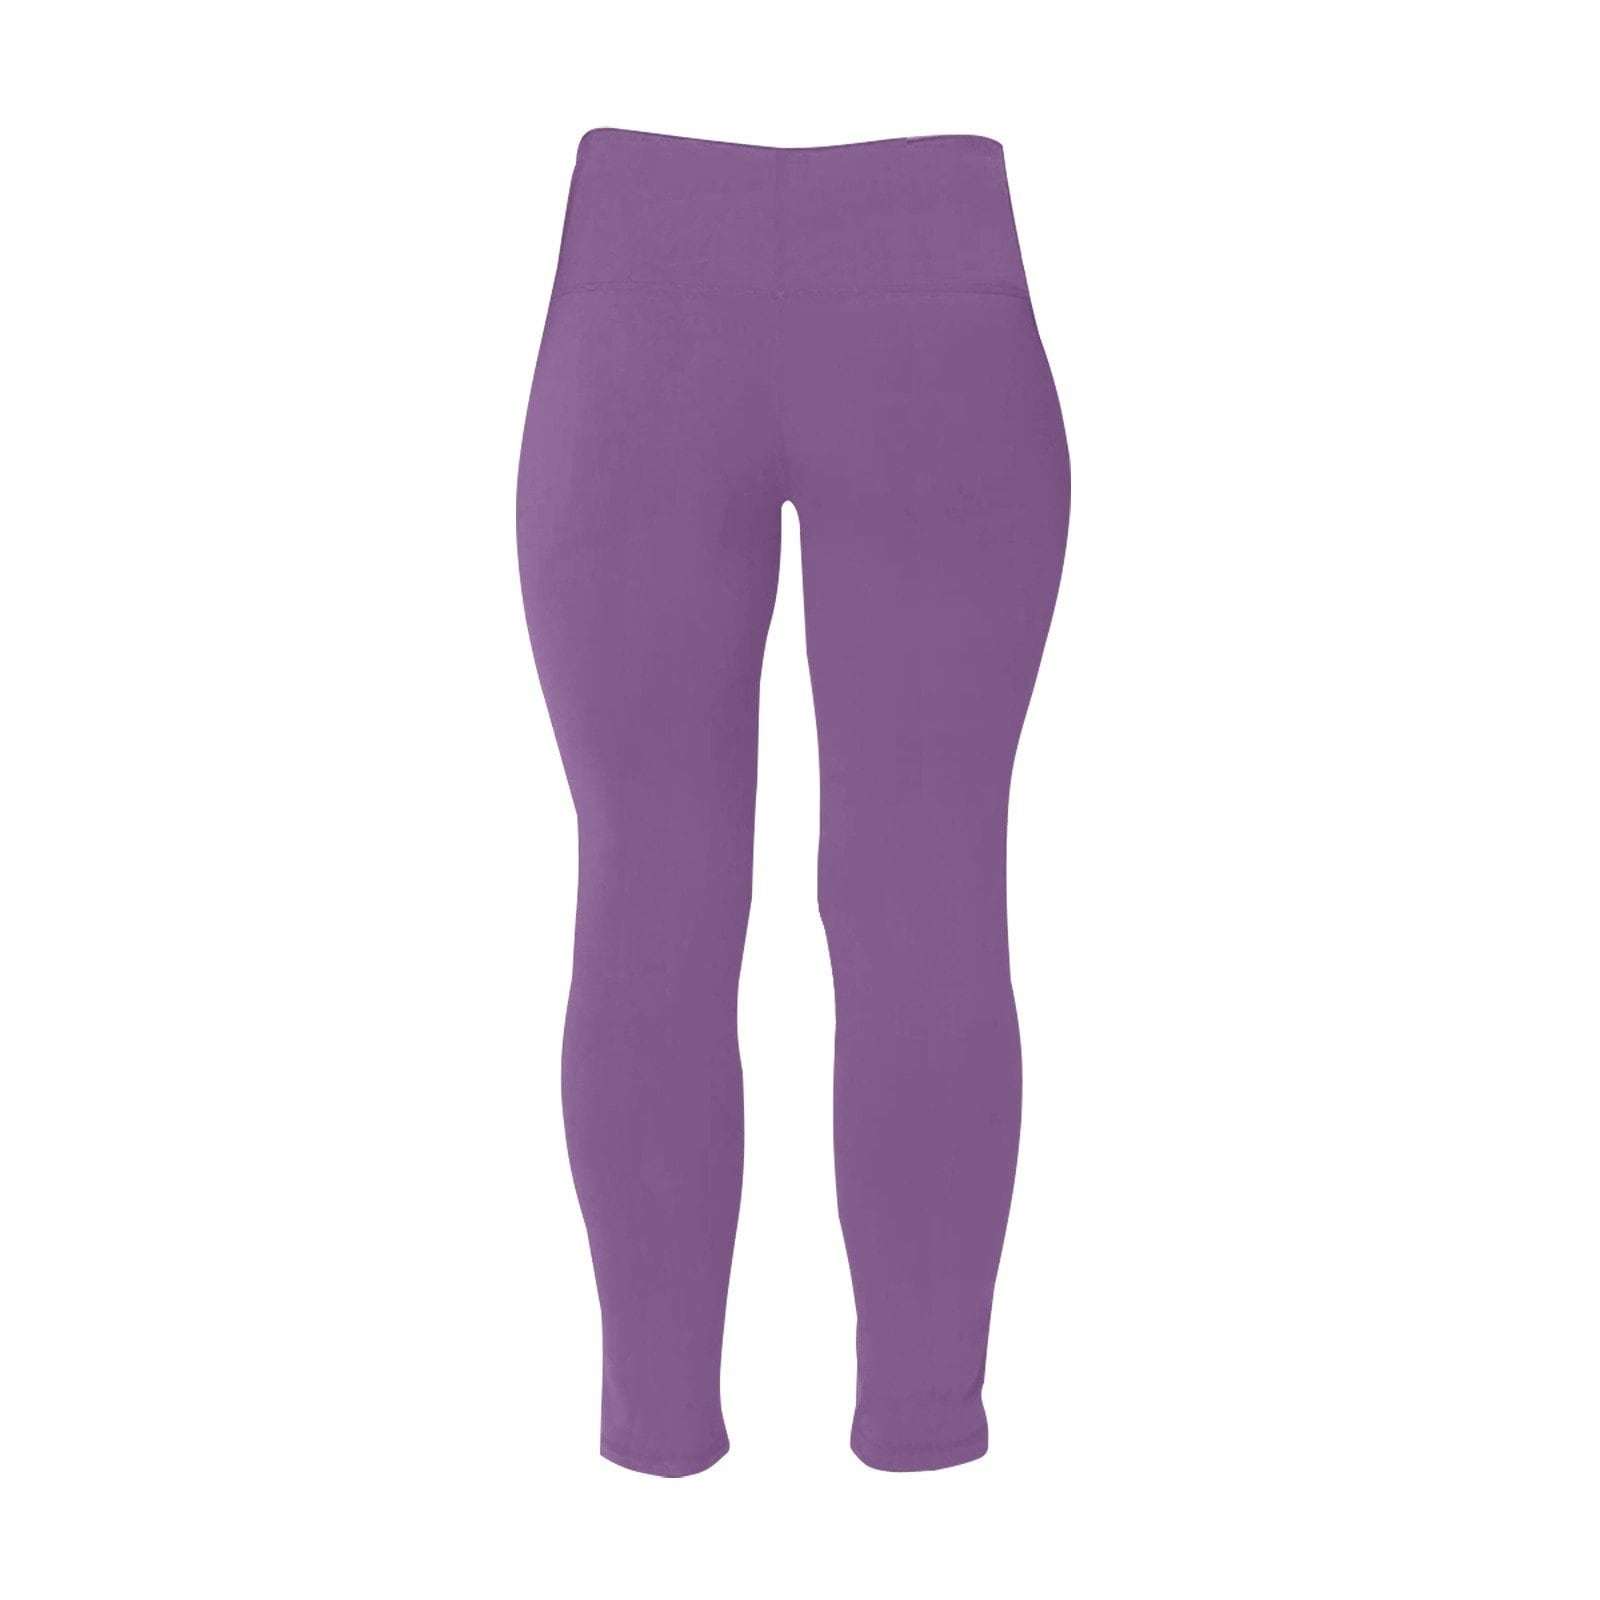 Purple Plus Size High Waist Leggings Model L45 | Etsy